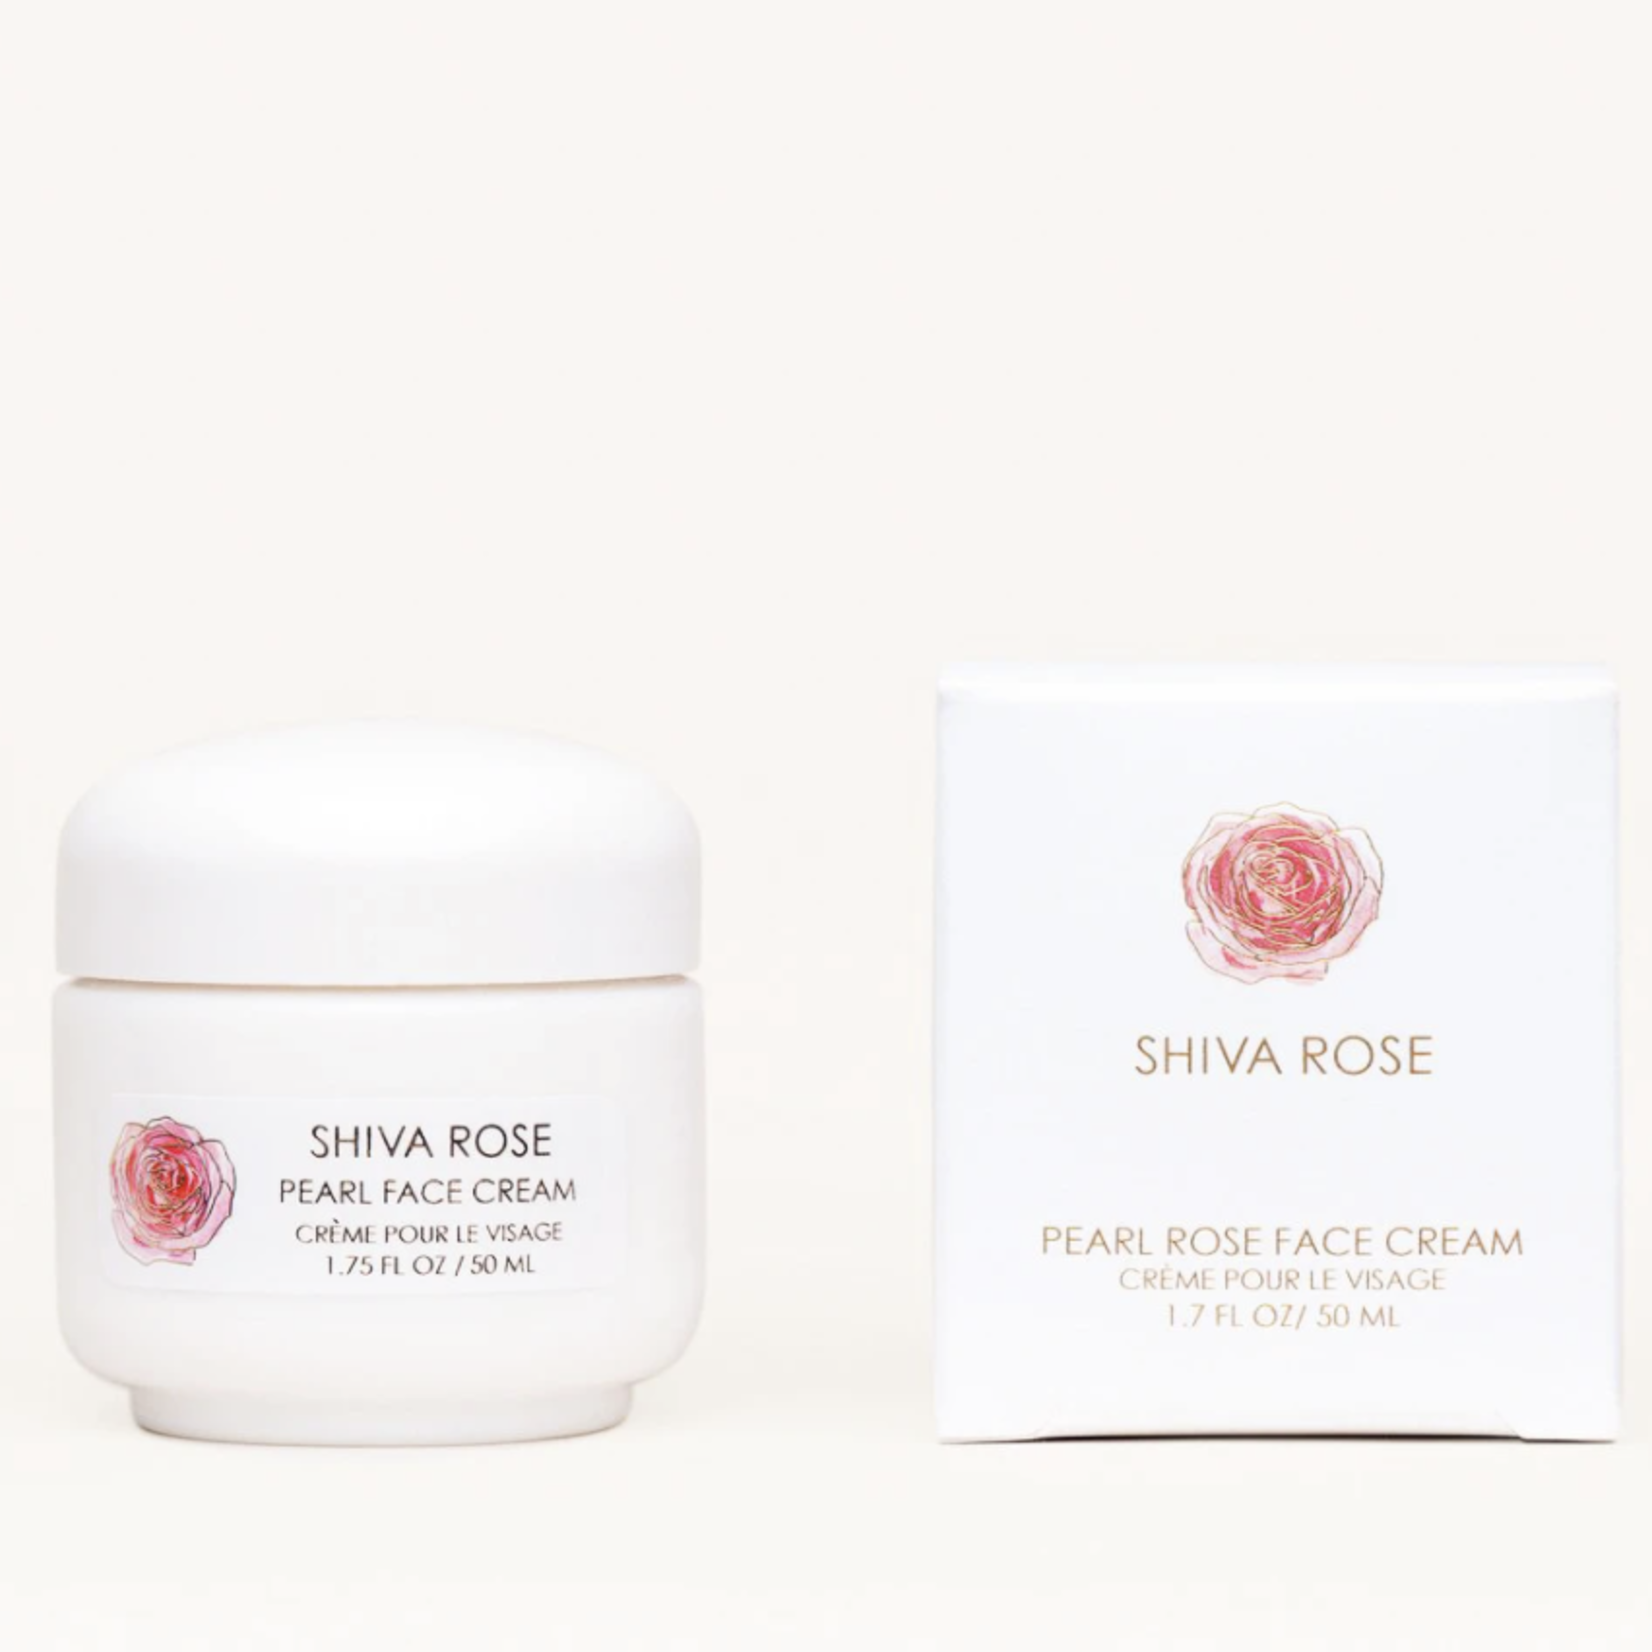 Shiva Rose Pearl Rose Face Cream